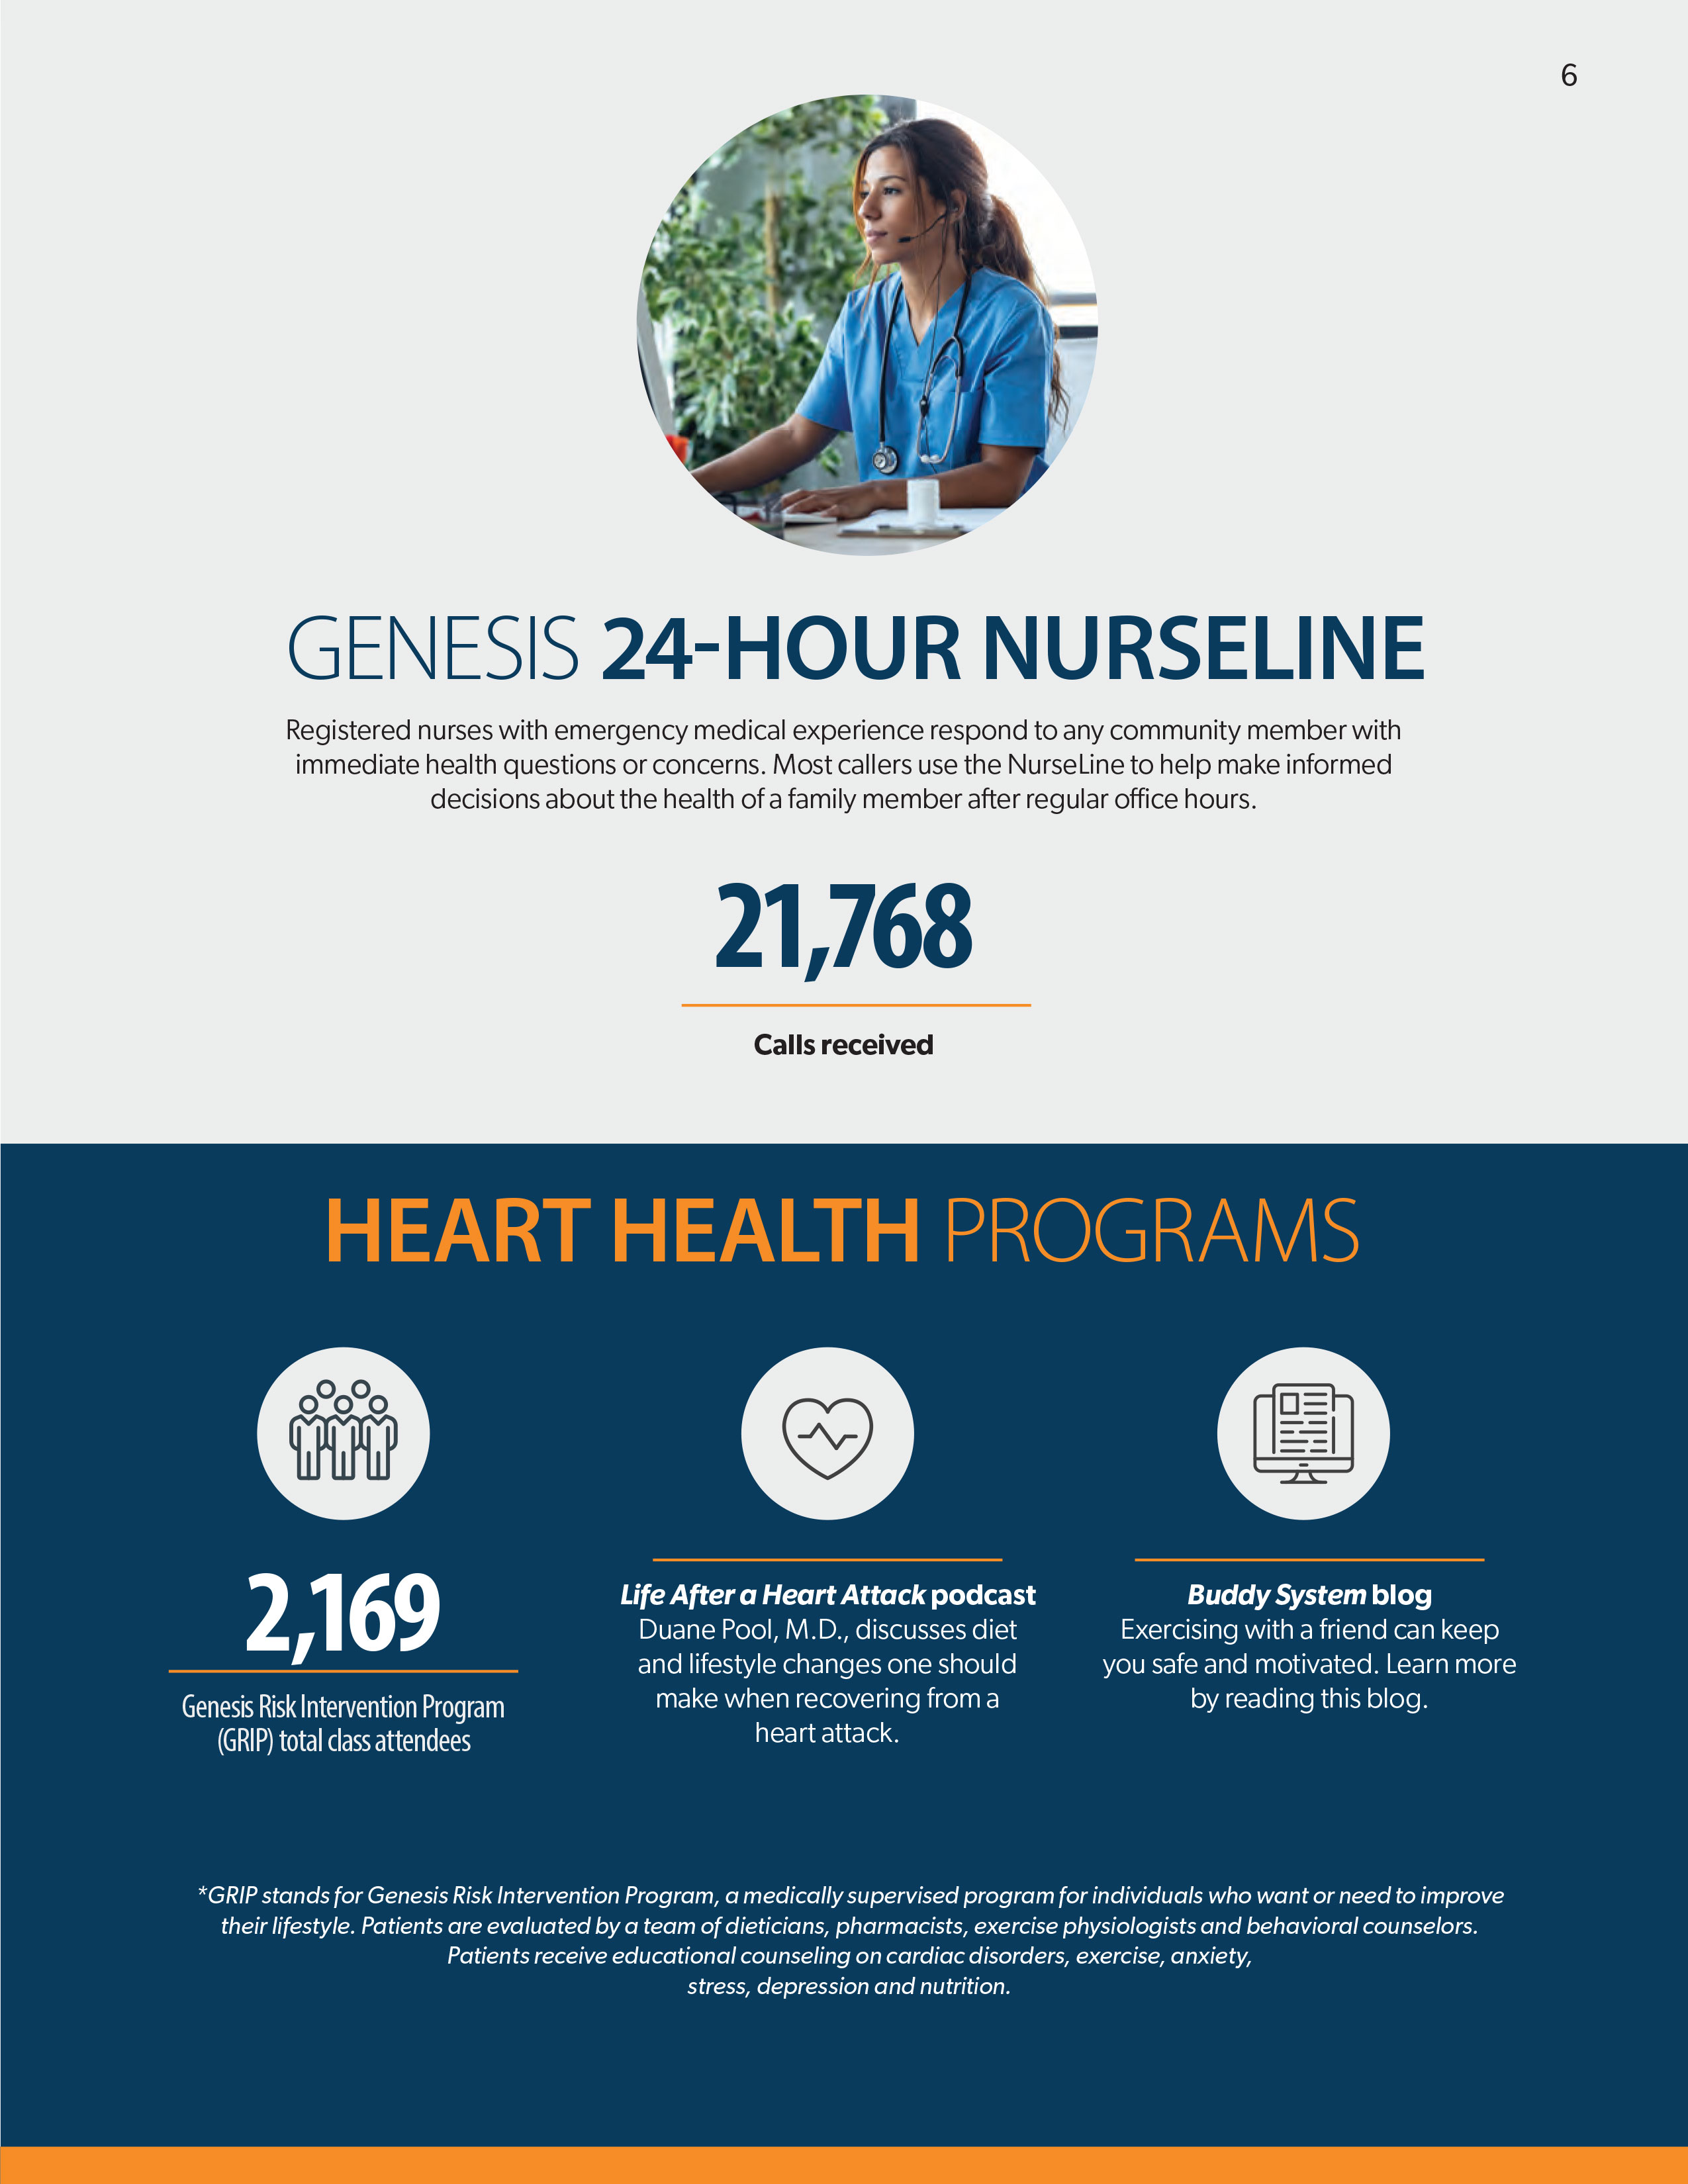 Genesis 24-hour nurseline and heart health programs